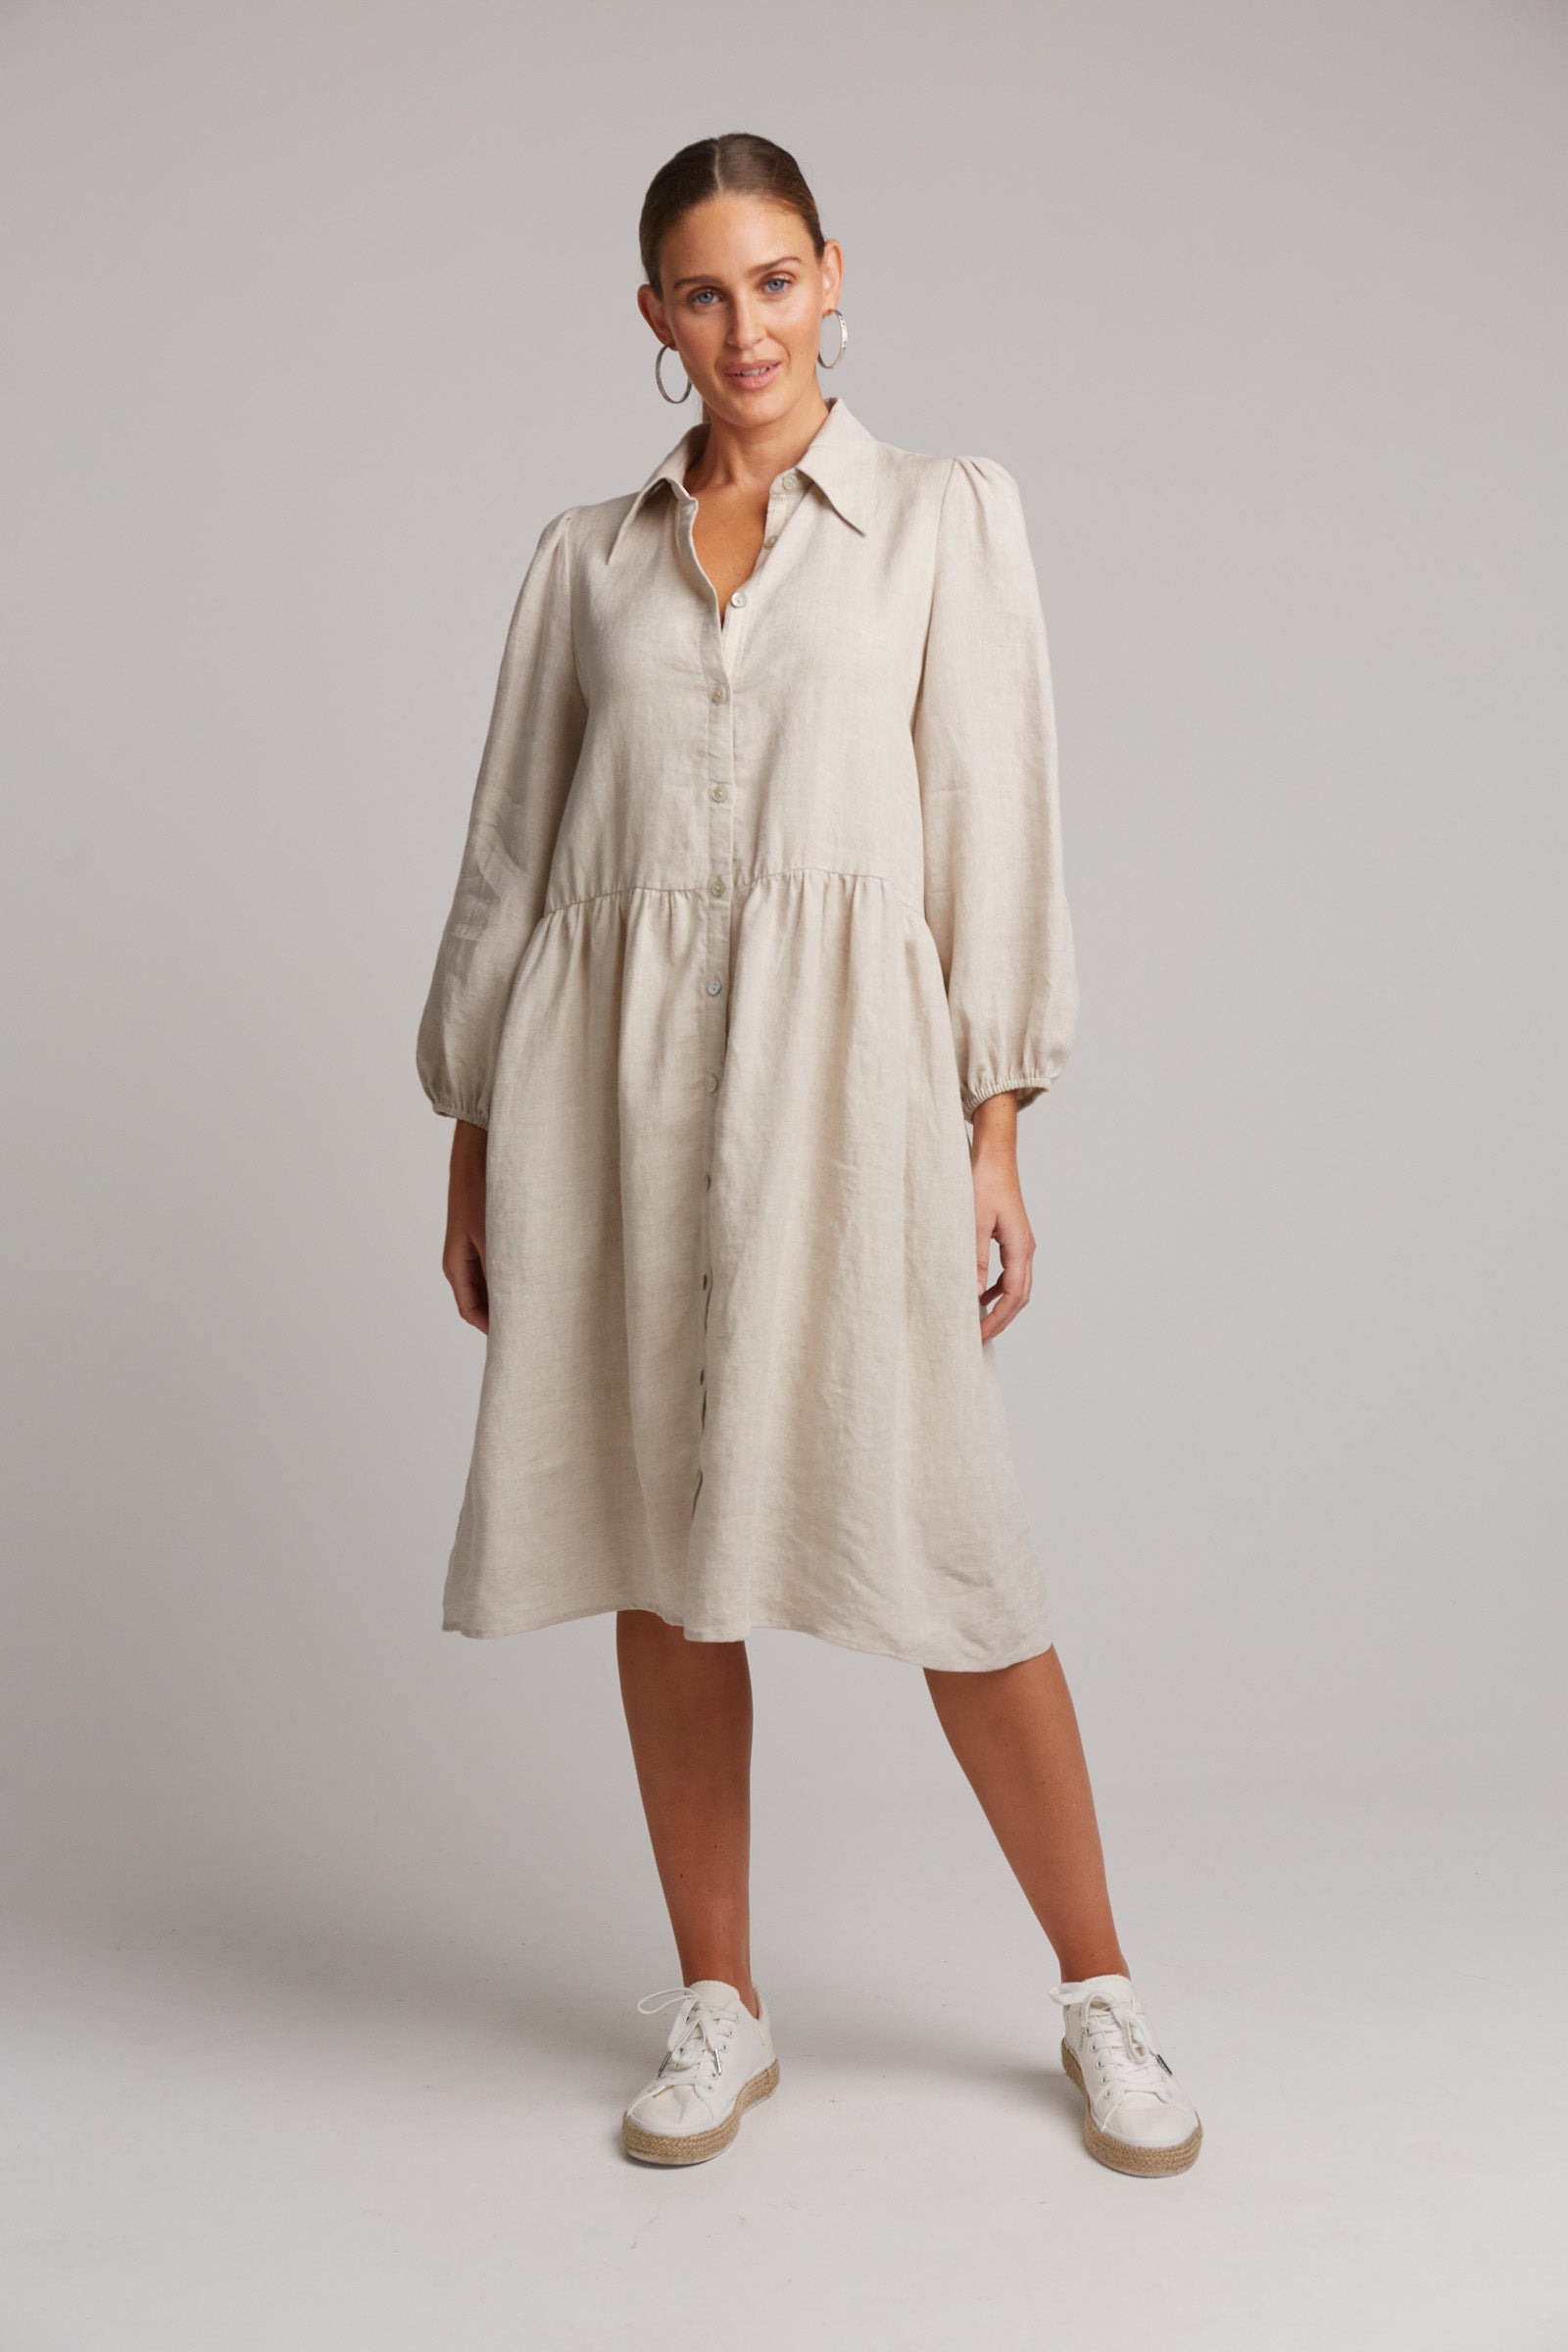 Studio Midi Shirt Dress - Tusk - eb&ive Clothing - Dress Mid Linen